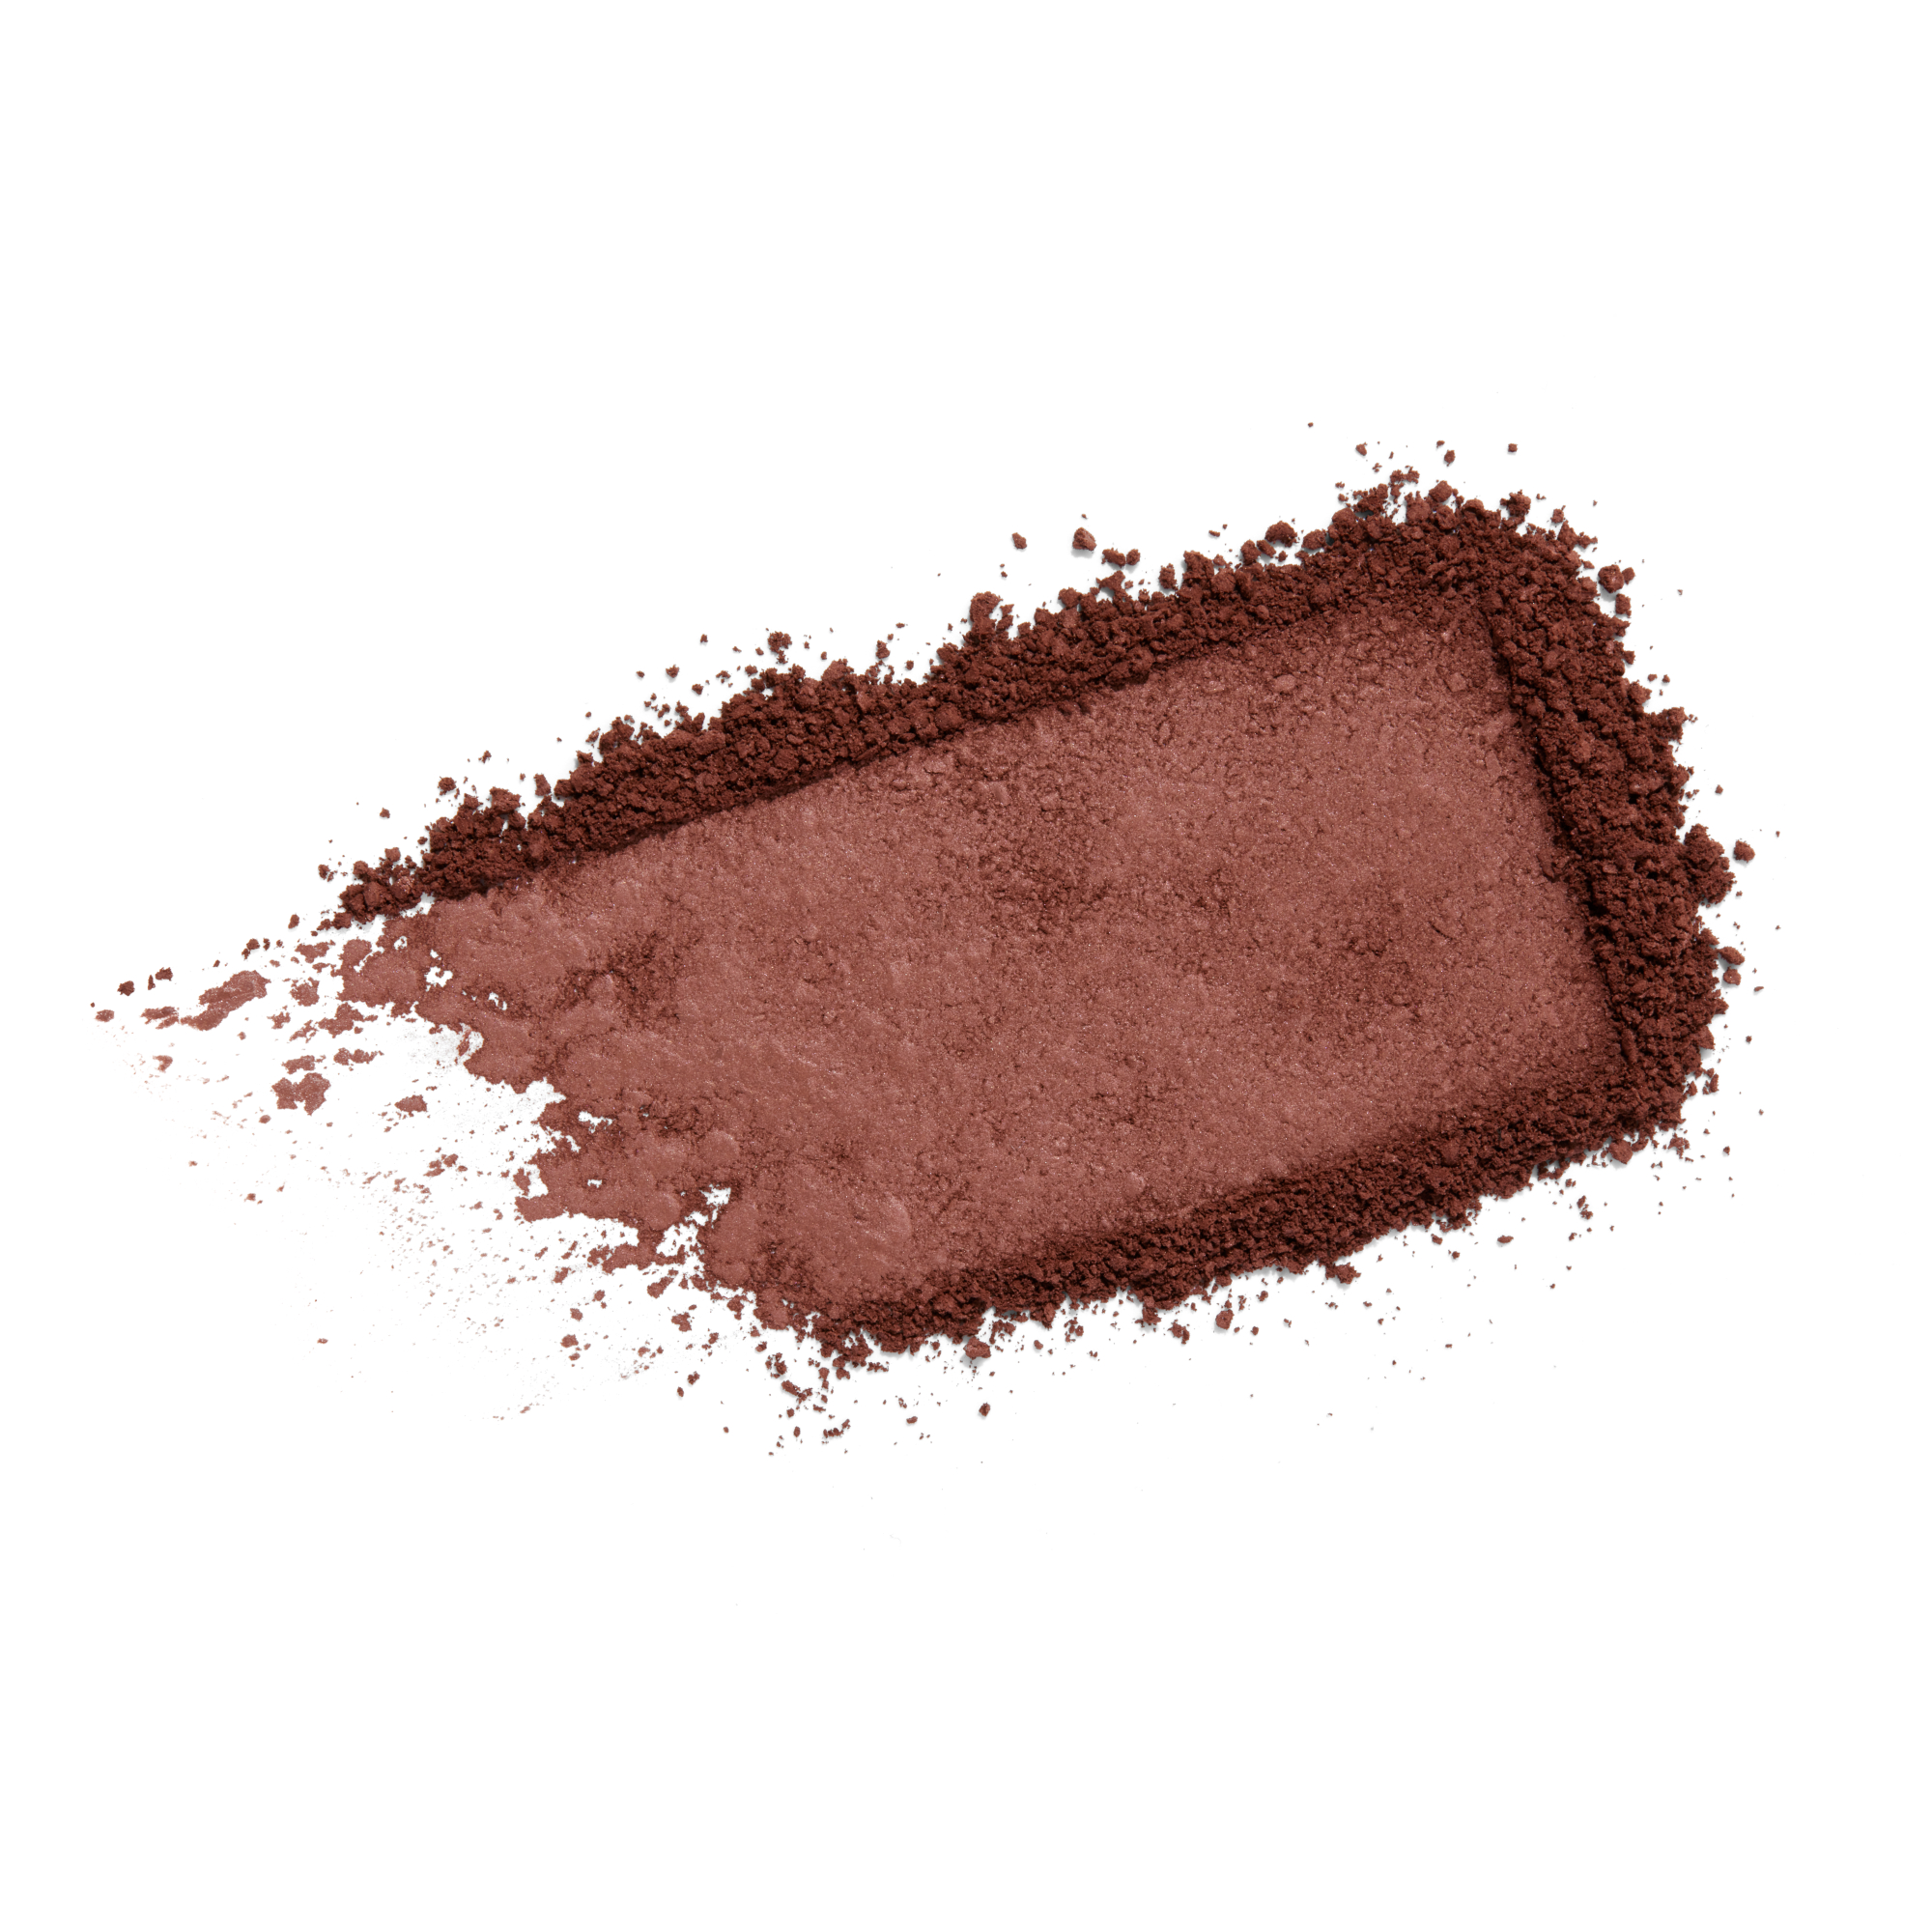 Benefit Cosmetics Java Blush In Rosy Mocha, Size: Full Size